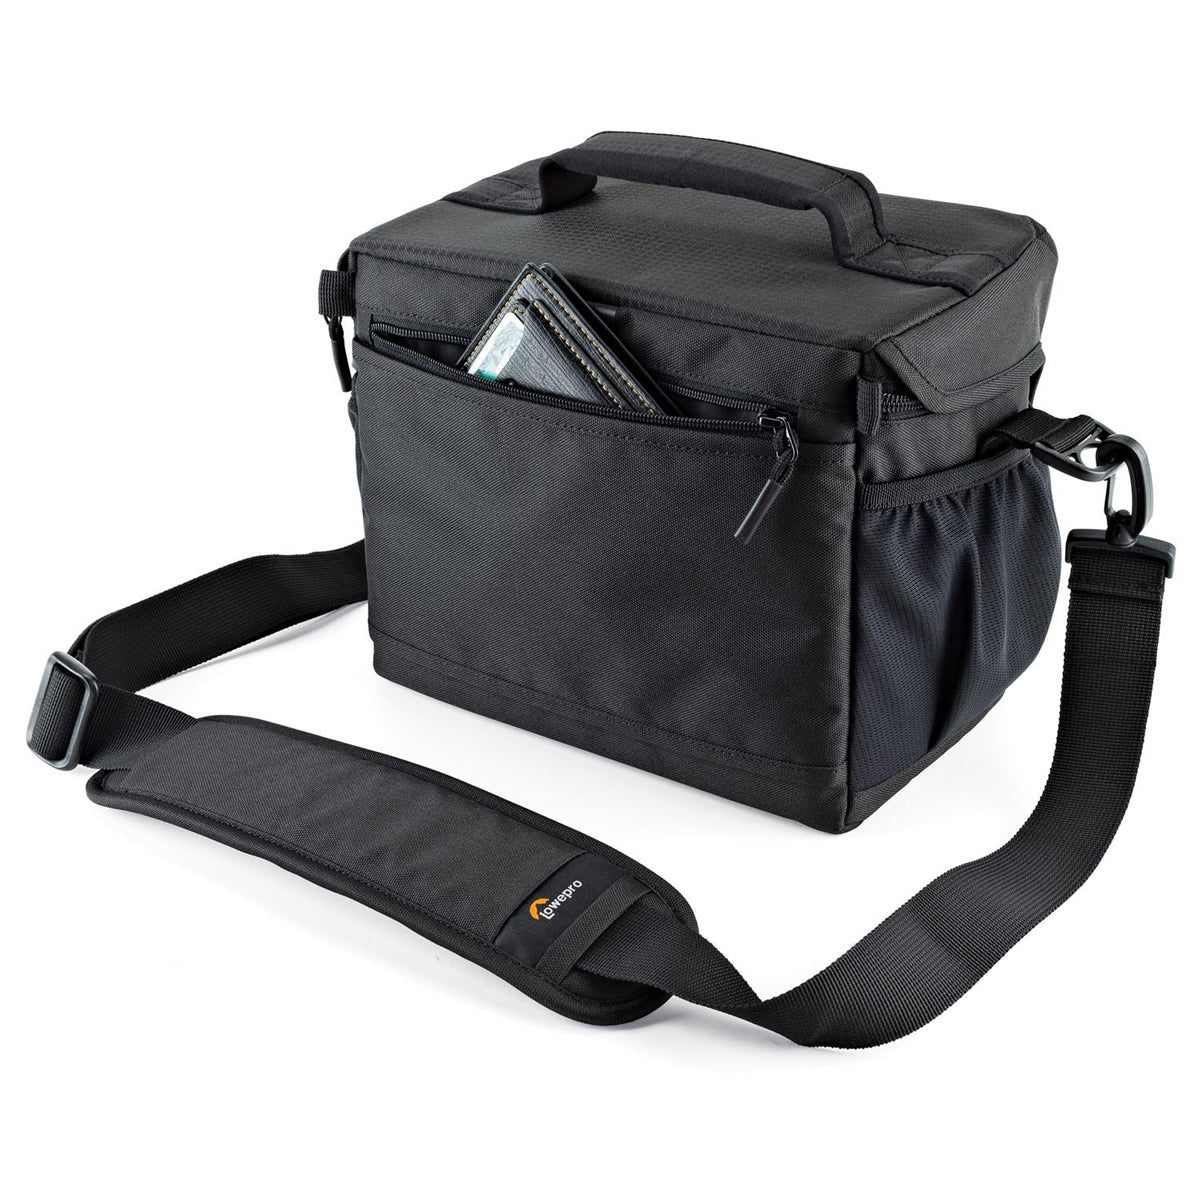 Lowepro Nova SH 180 AW II Camera Shoulder Bag (Black)